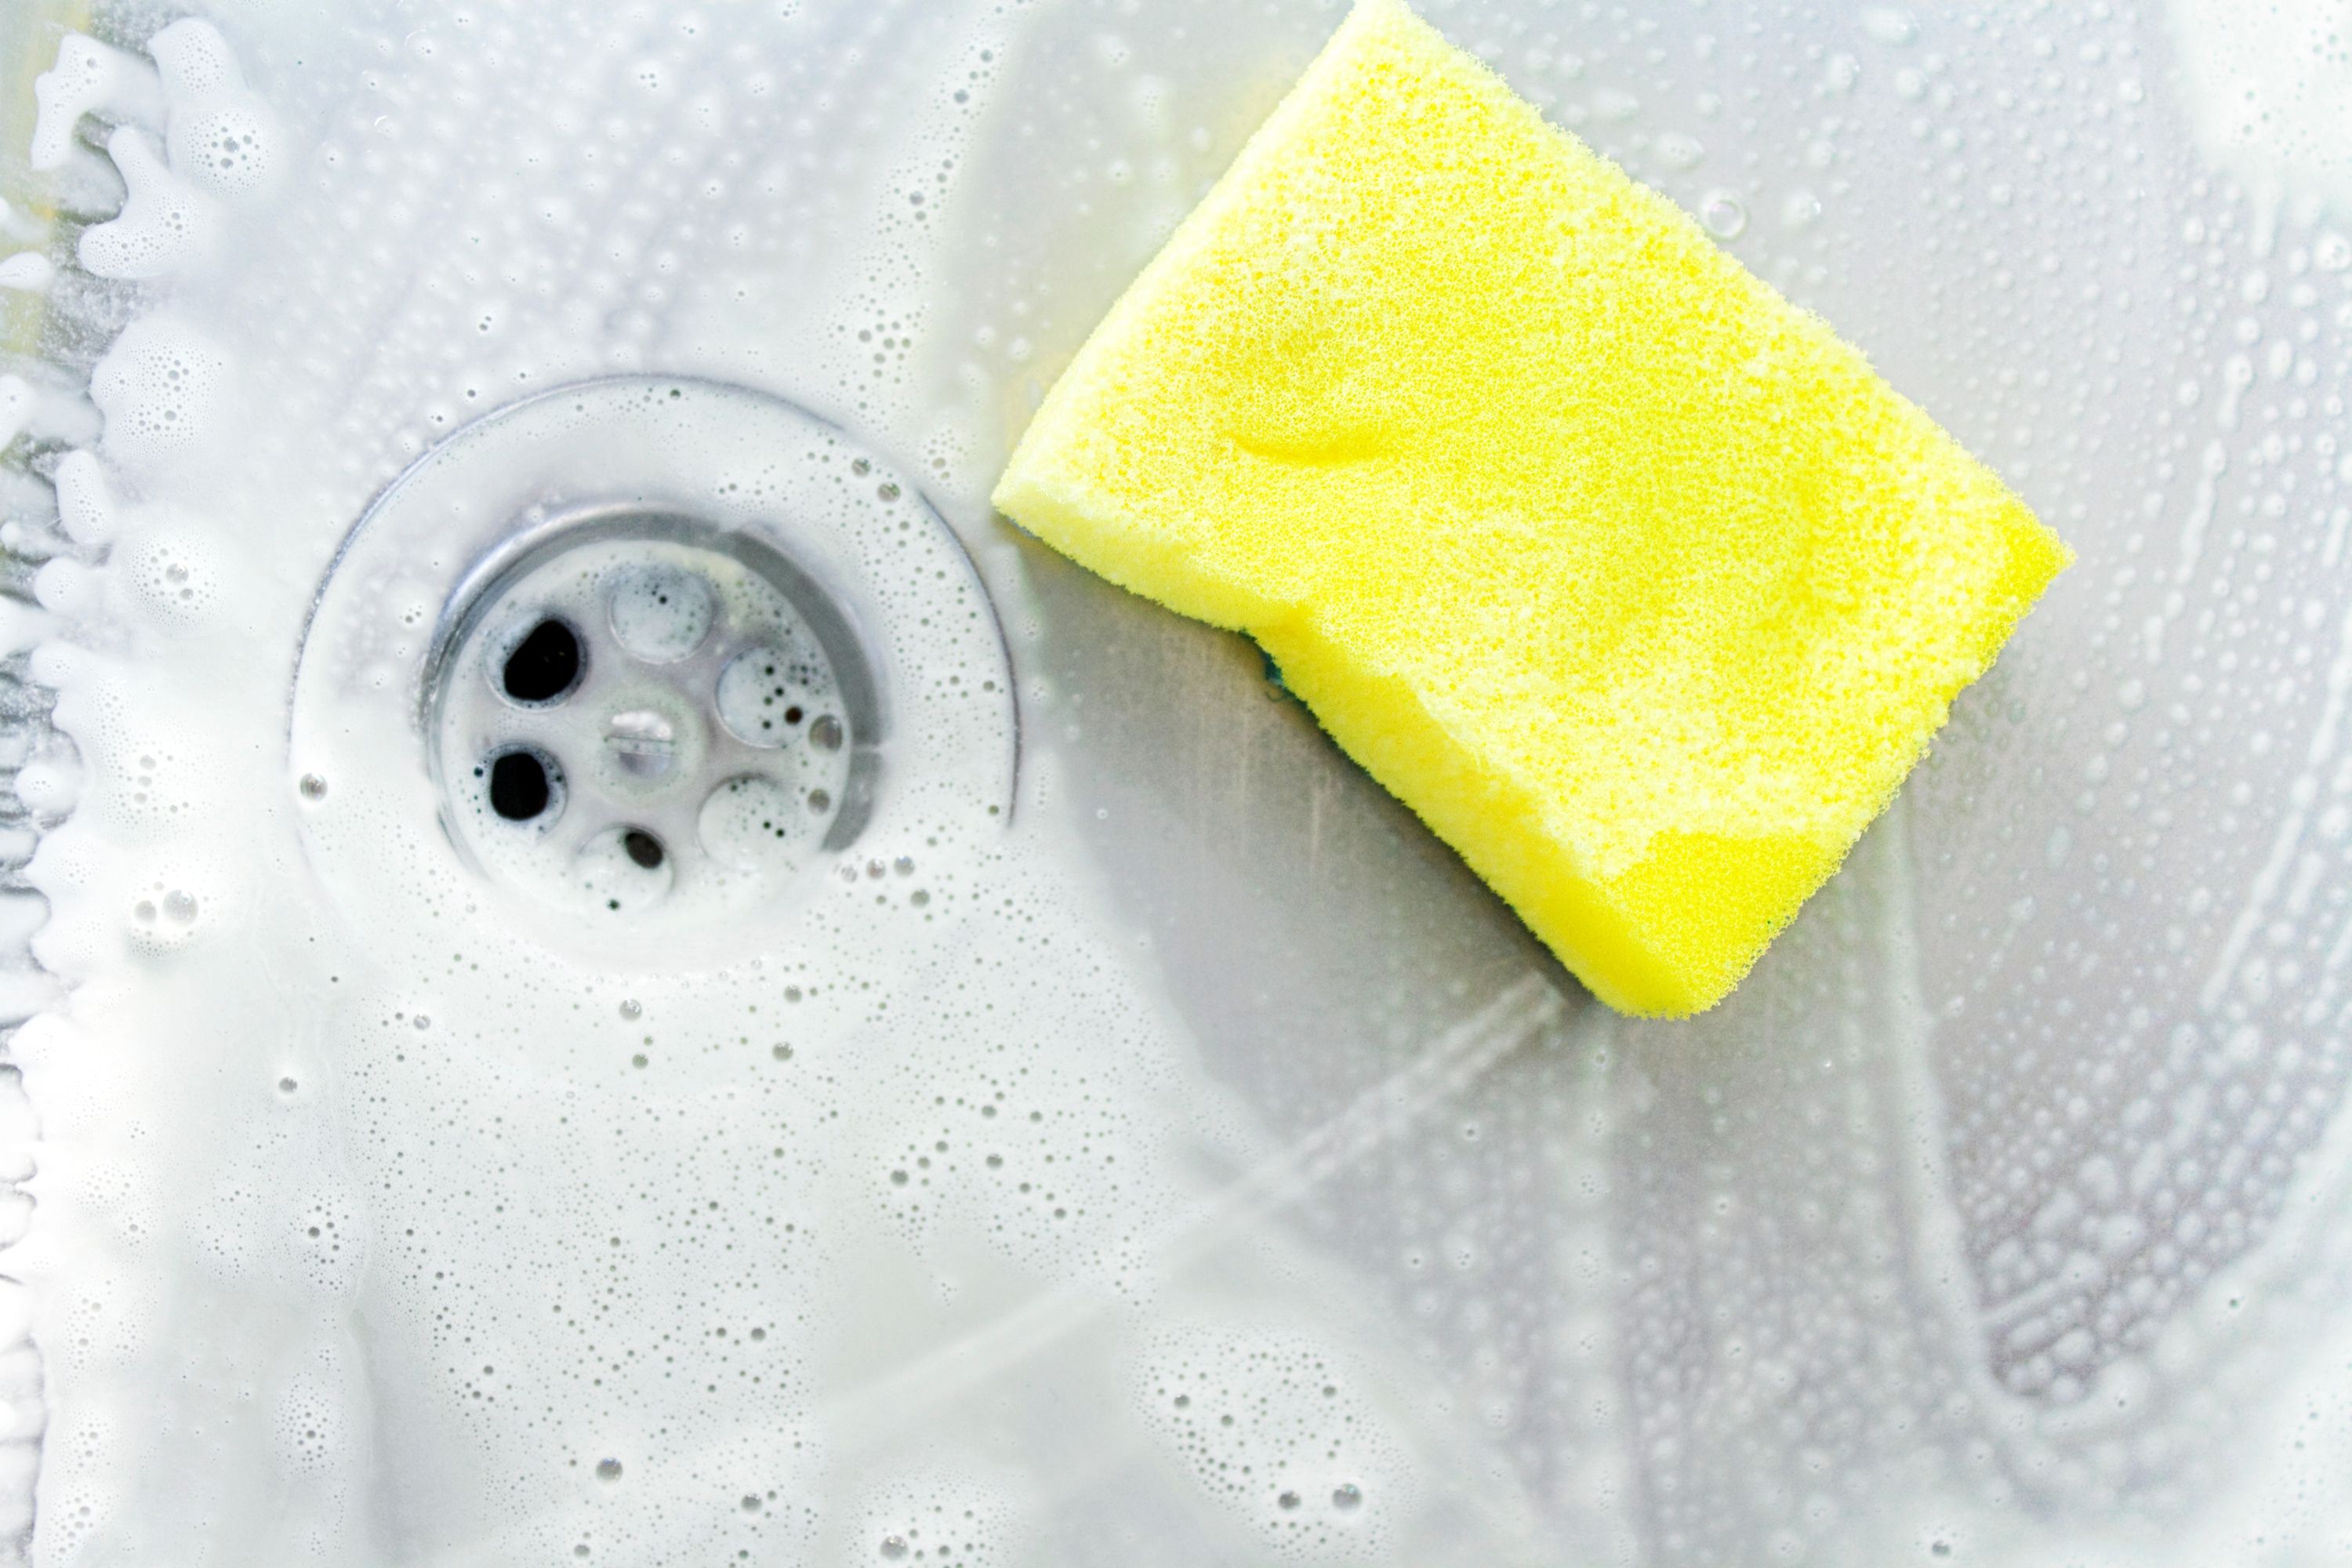 How To Clean A Sponge 27 Ways - Dishwasher, Microwave, Vinegar